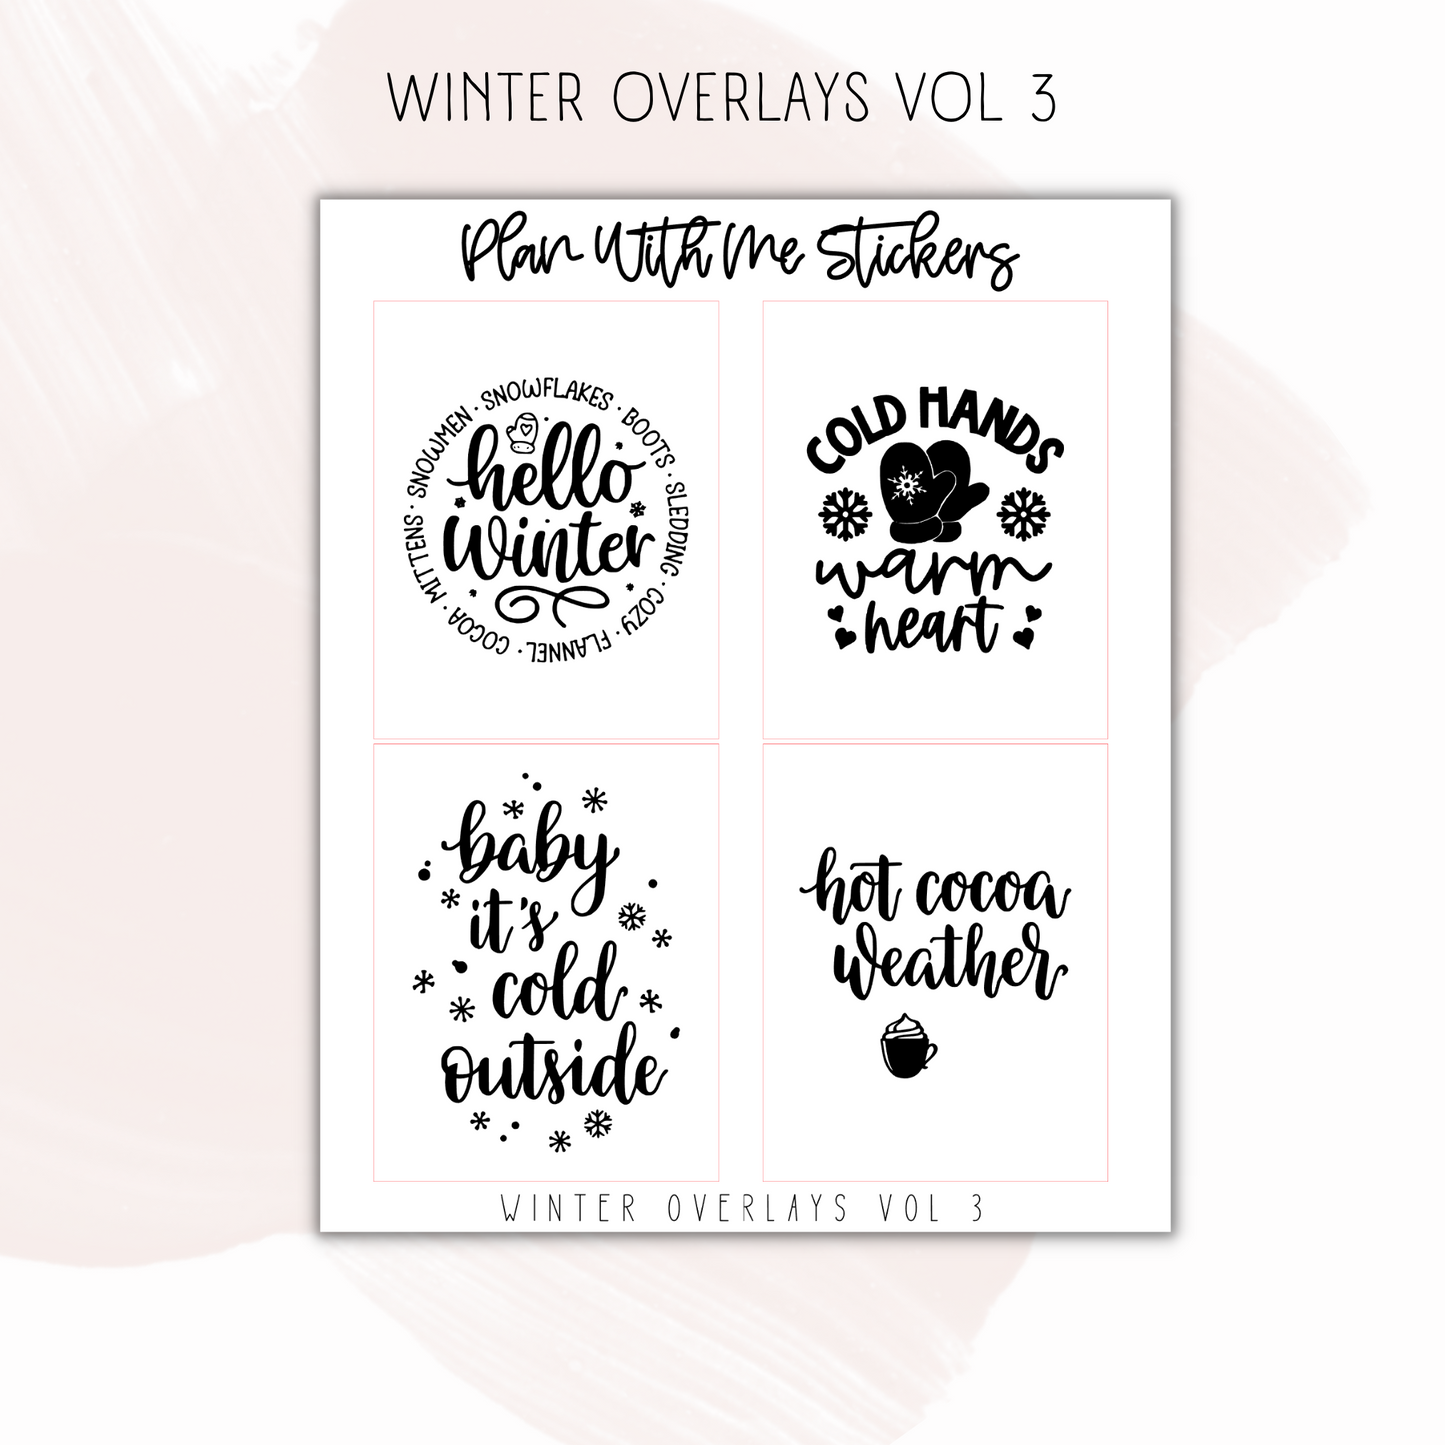 Winter Overlays Vol 3